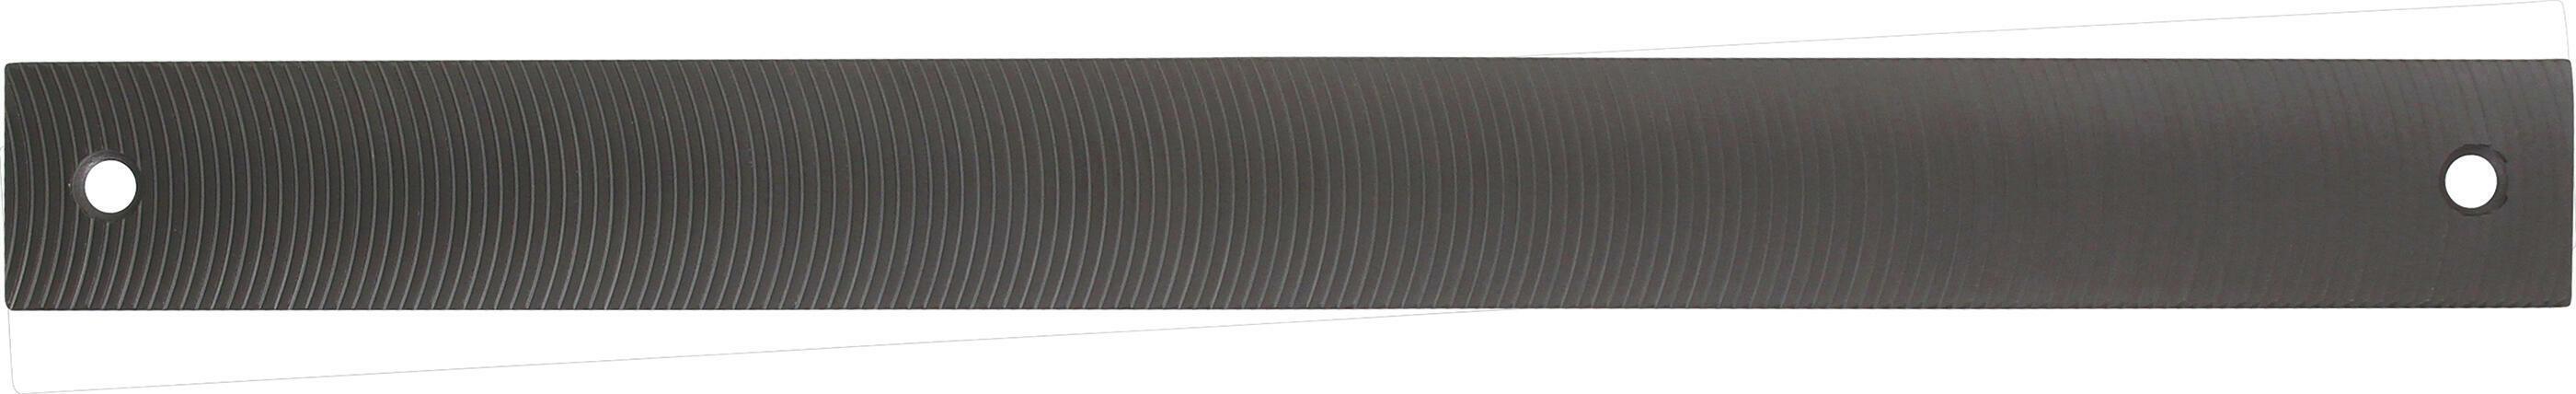 Karosseriefeilenblatt | fein | radial gefräst | 350 x 35 x 4 mm